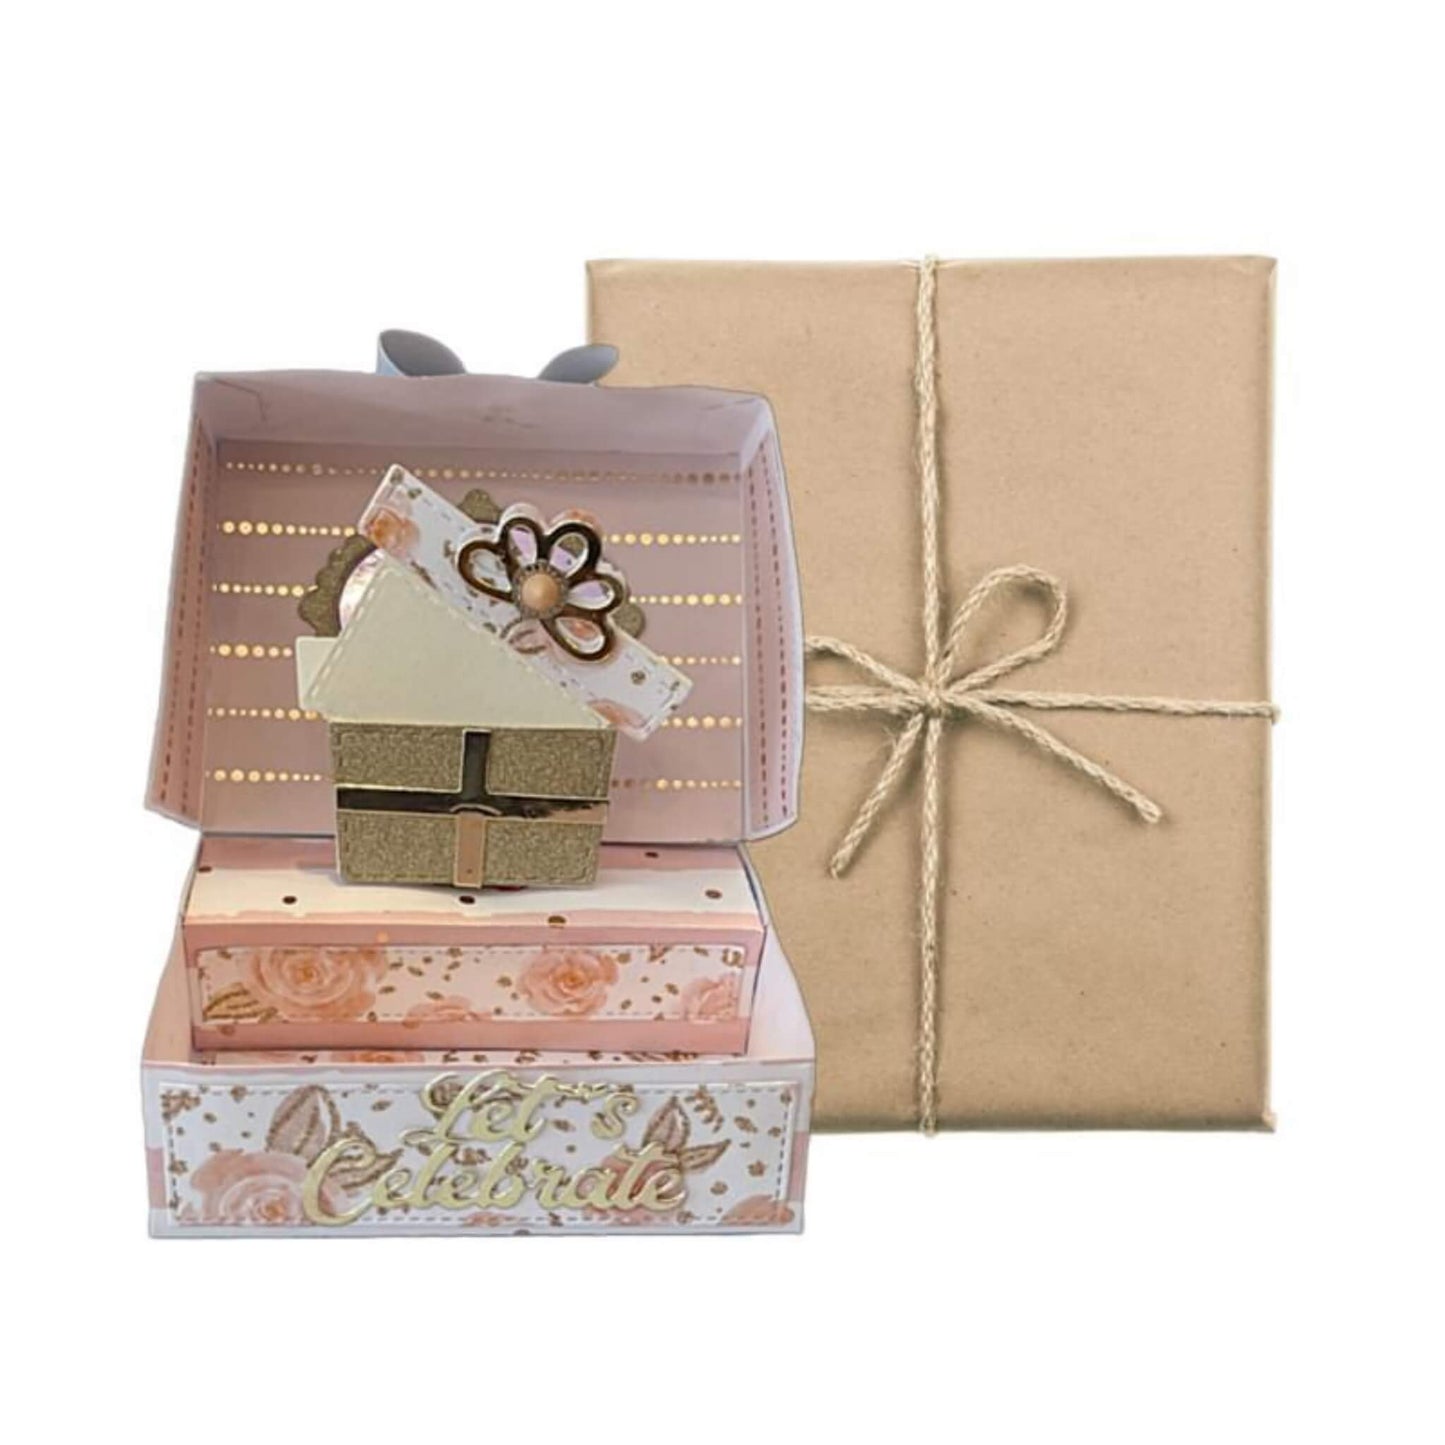 A Wish Surprise Cupcake - Music Box Add-On die set bundle